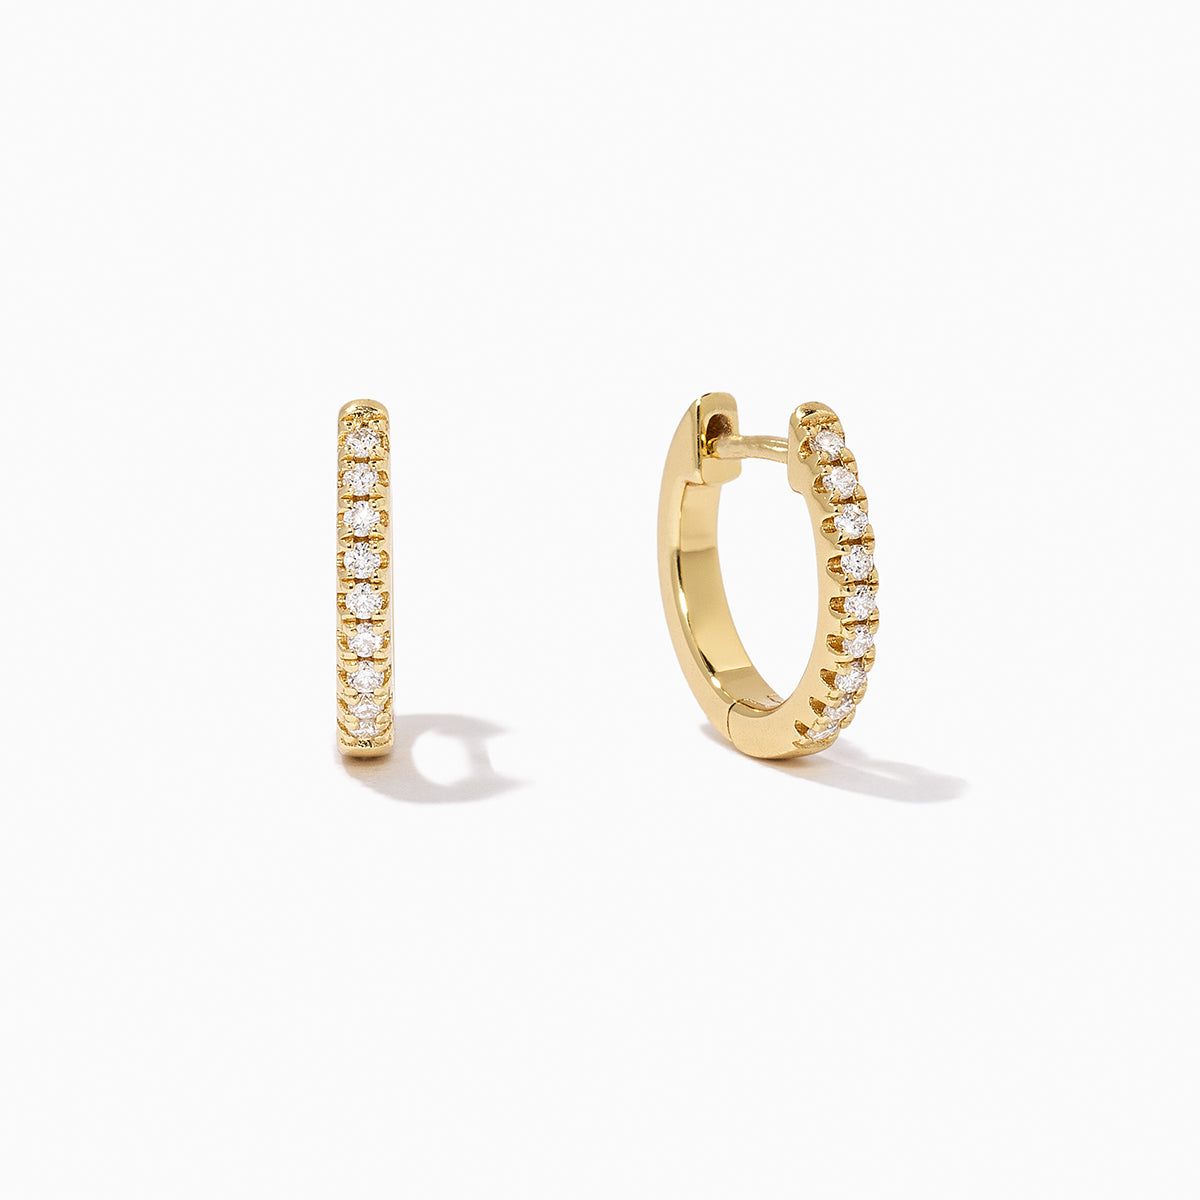 Studded Vermeil Huggies Earrings | Gold Vermeil | Product Detail Image | Uncommon James